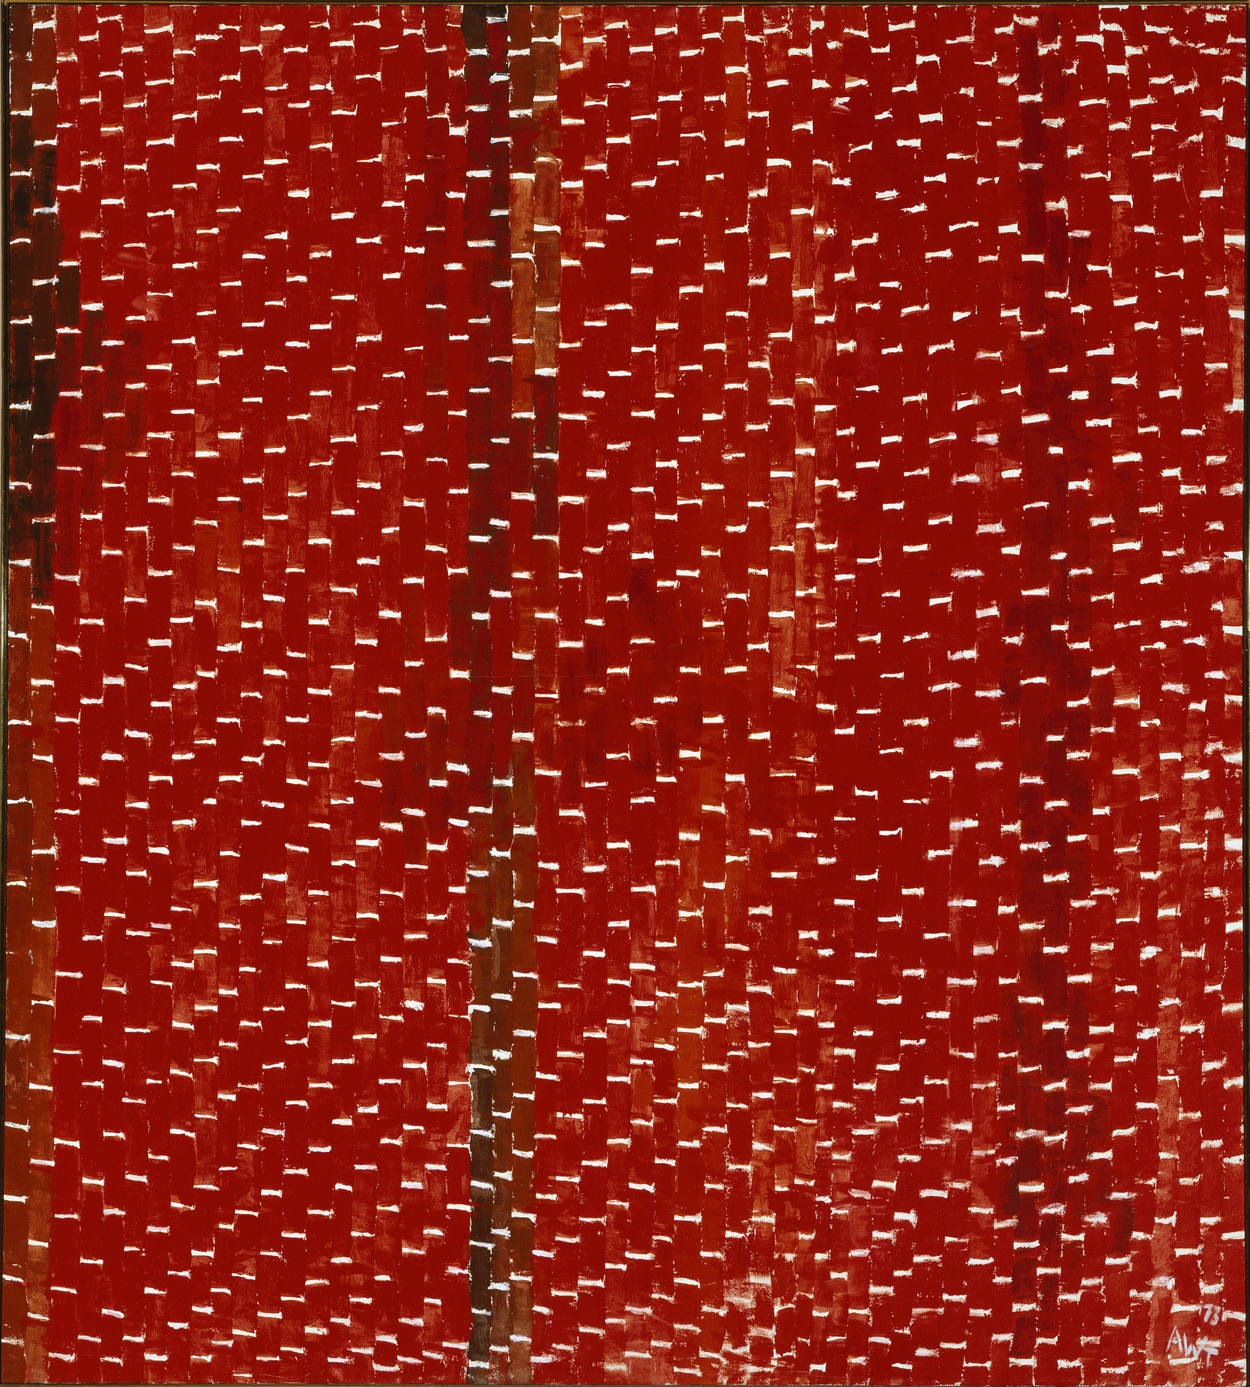 Орион  by Альма Вудси Томас - 1973 - 59 3/4 x 54 дюймов 